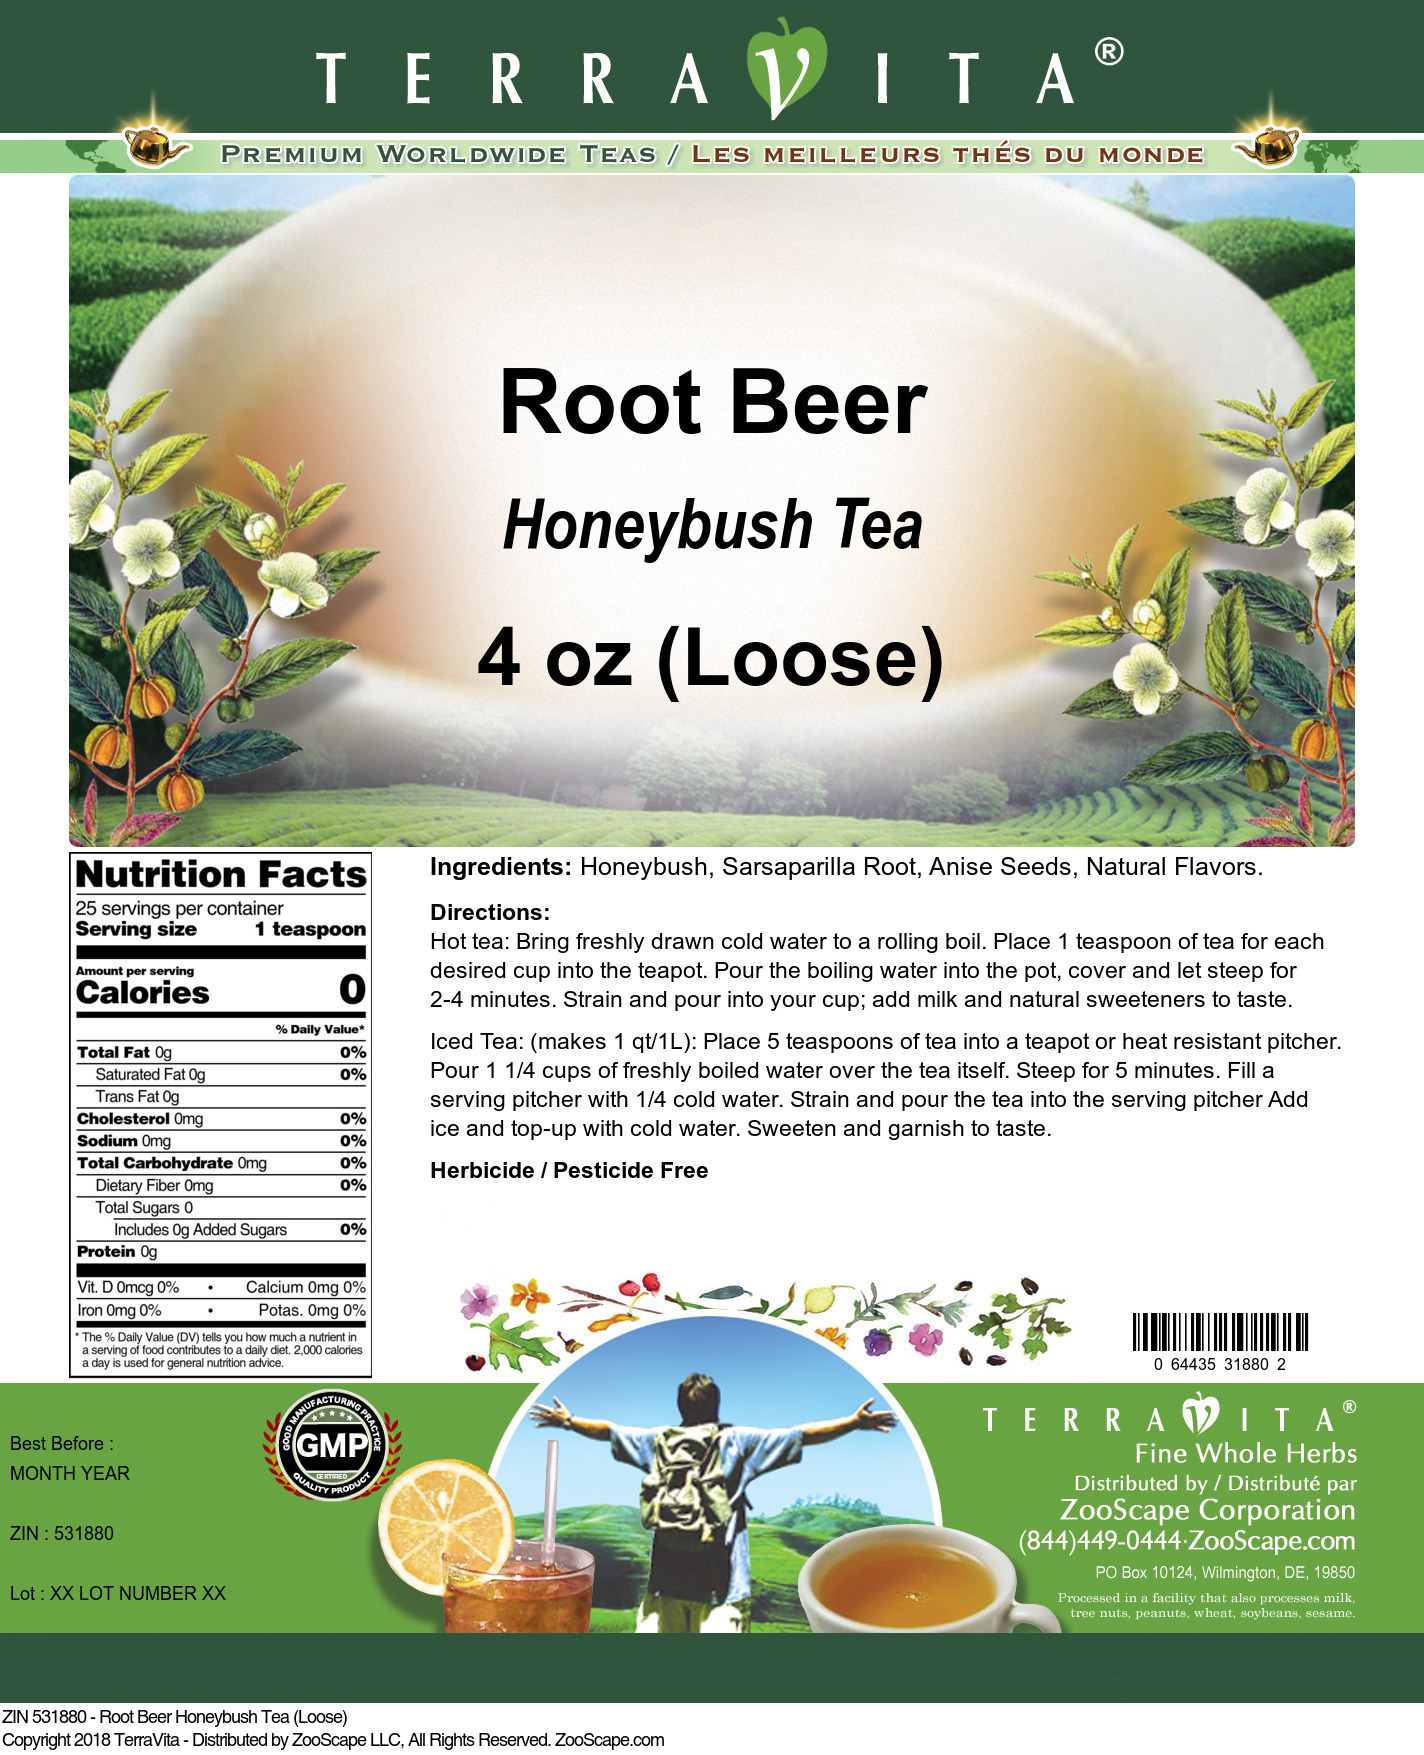 Root Beer Honeybush Tea (Loose) - Label